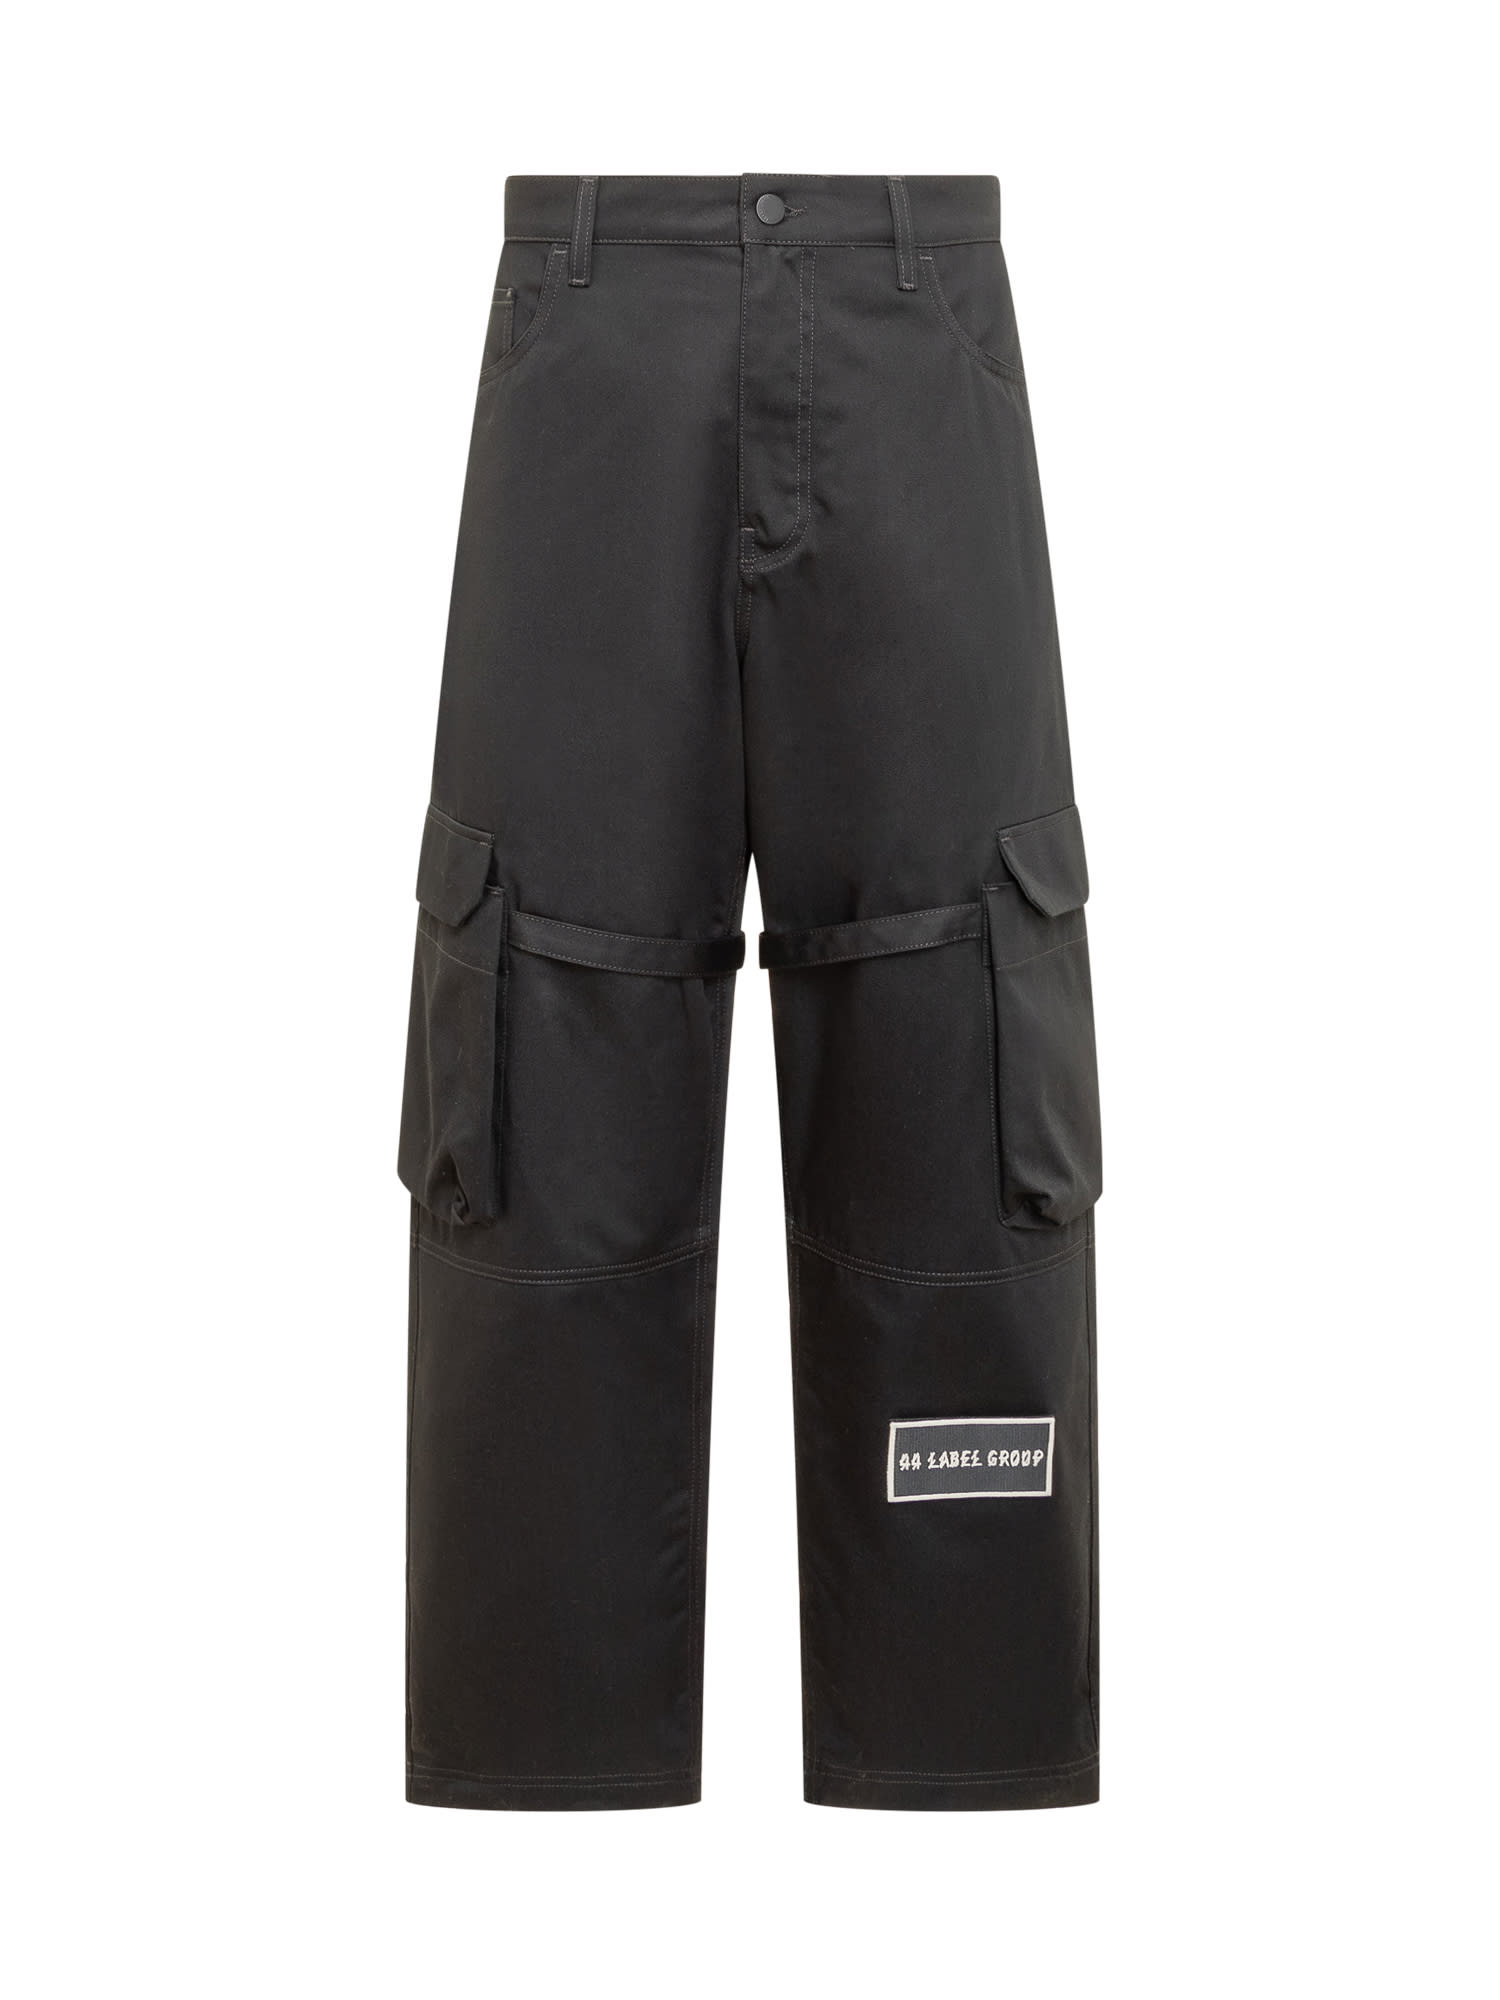 Shop 44 Label Group Cargo Pants Pants In Black